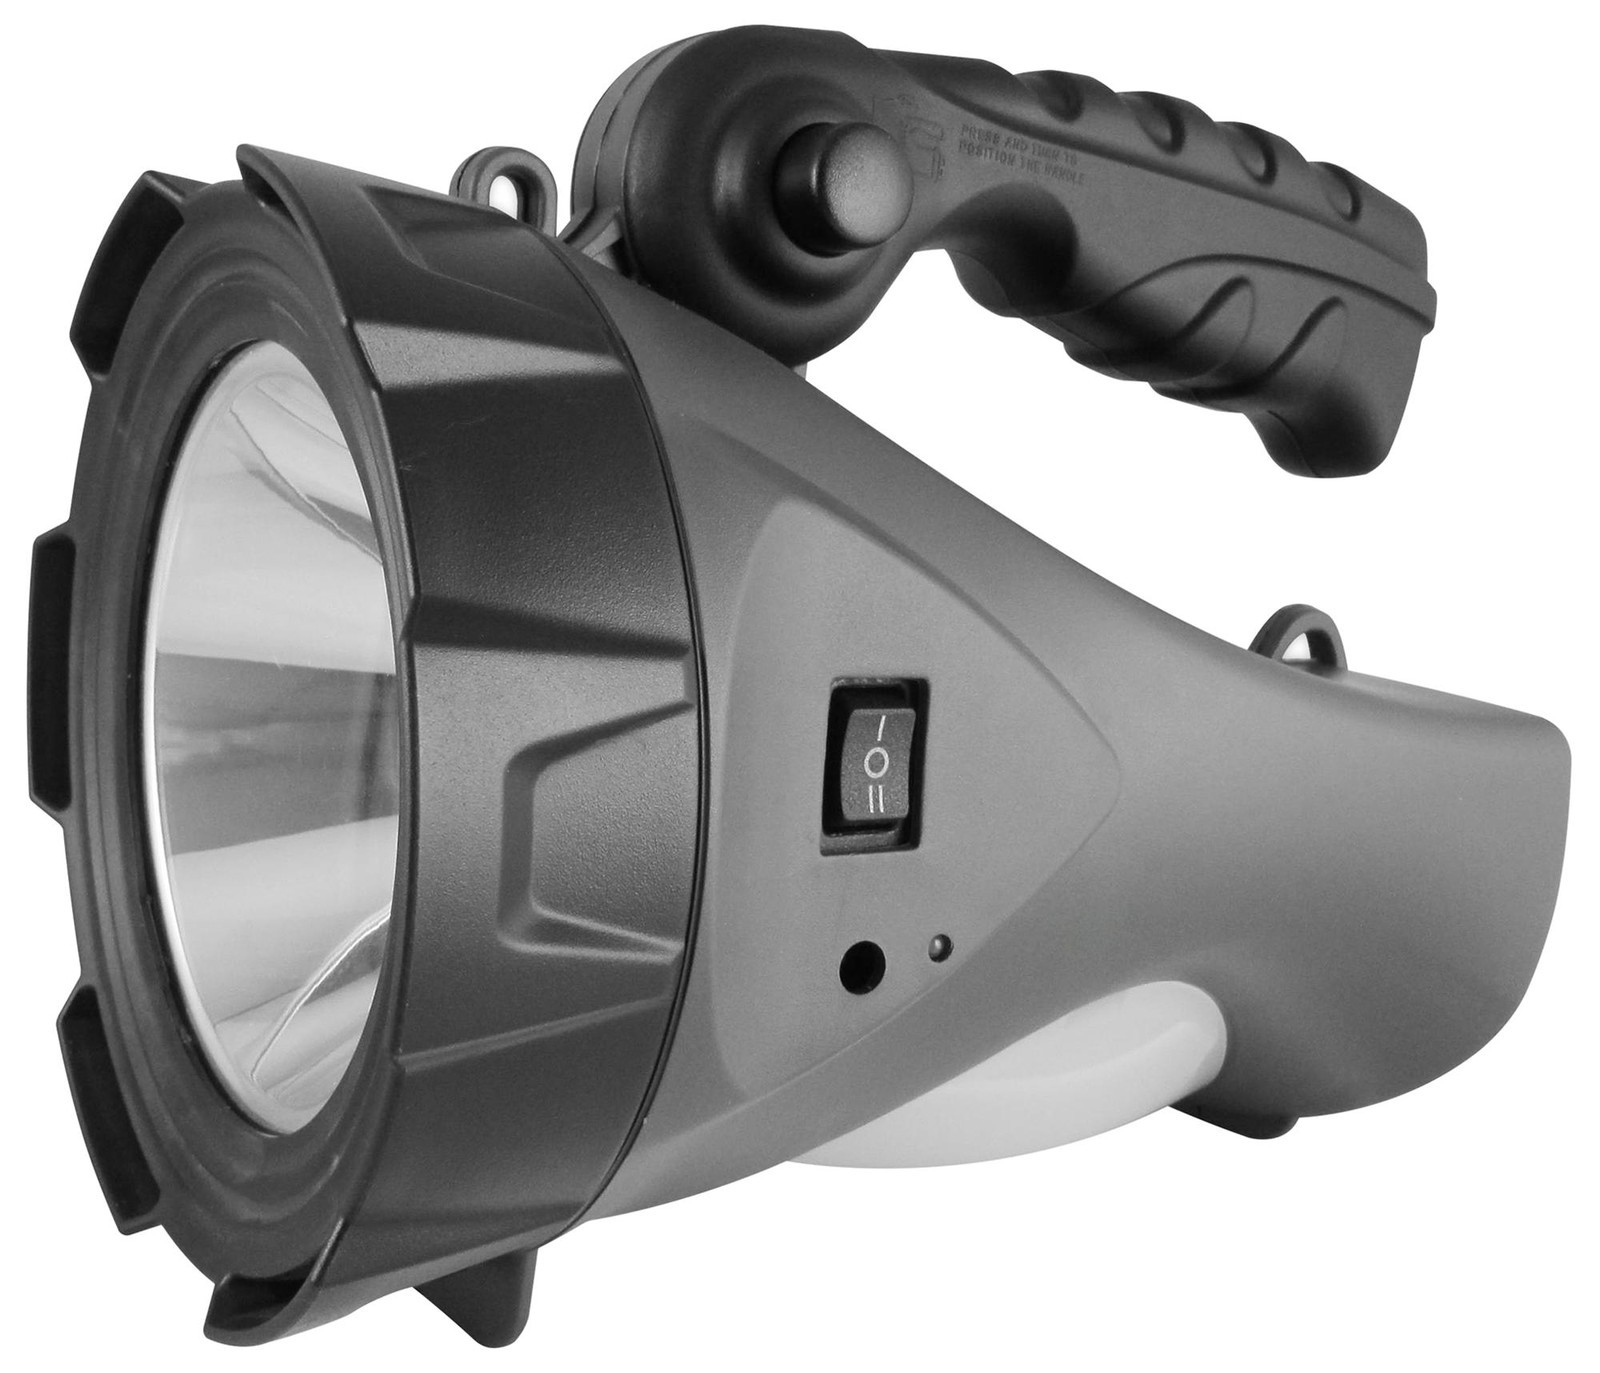 Uni-Com 66804 Rechargeable Spotlight & Lantern